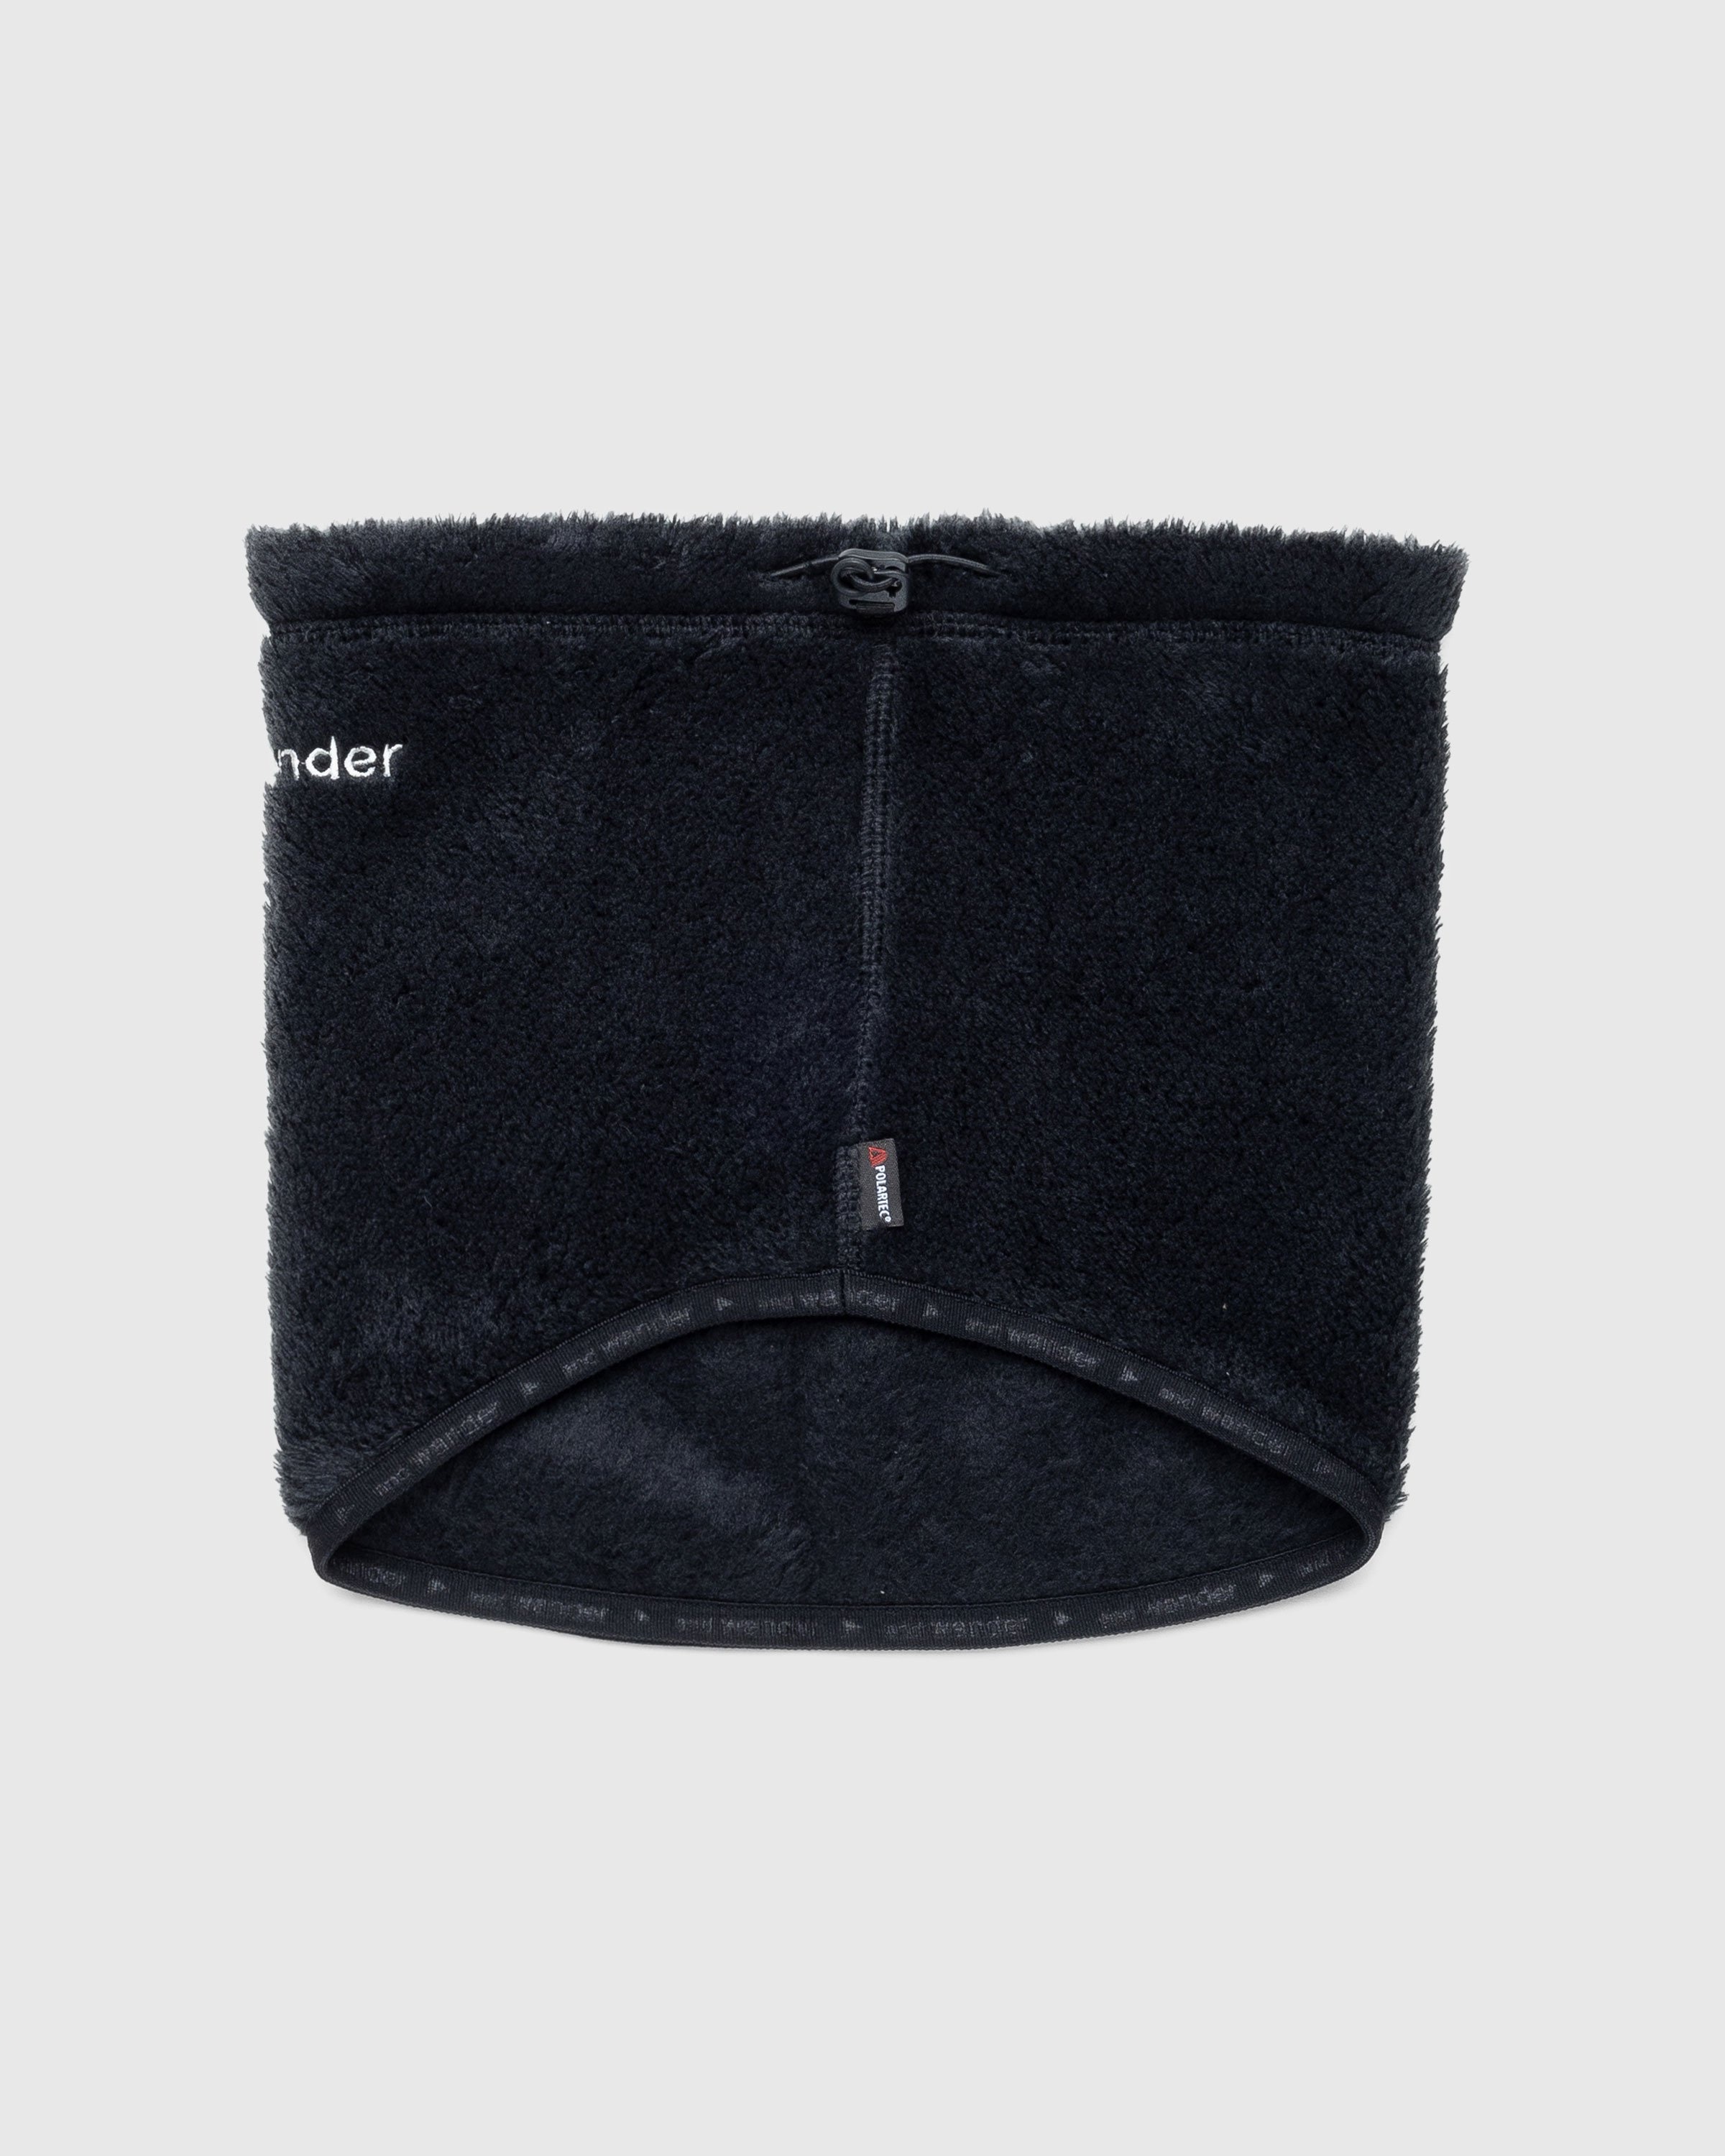 And Wander – High Loft Fleece Neck Warmer Black | Highsnobiety Shop